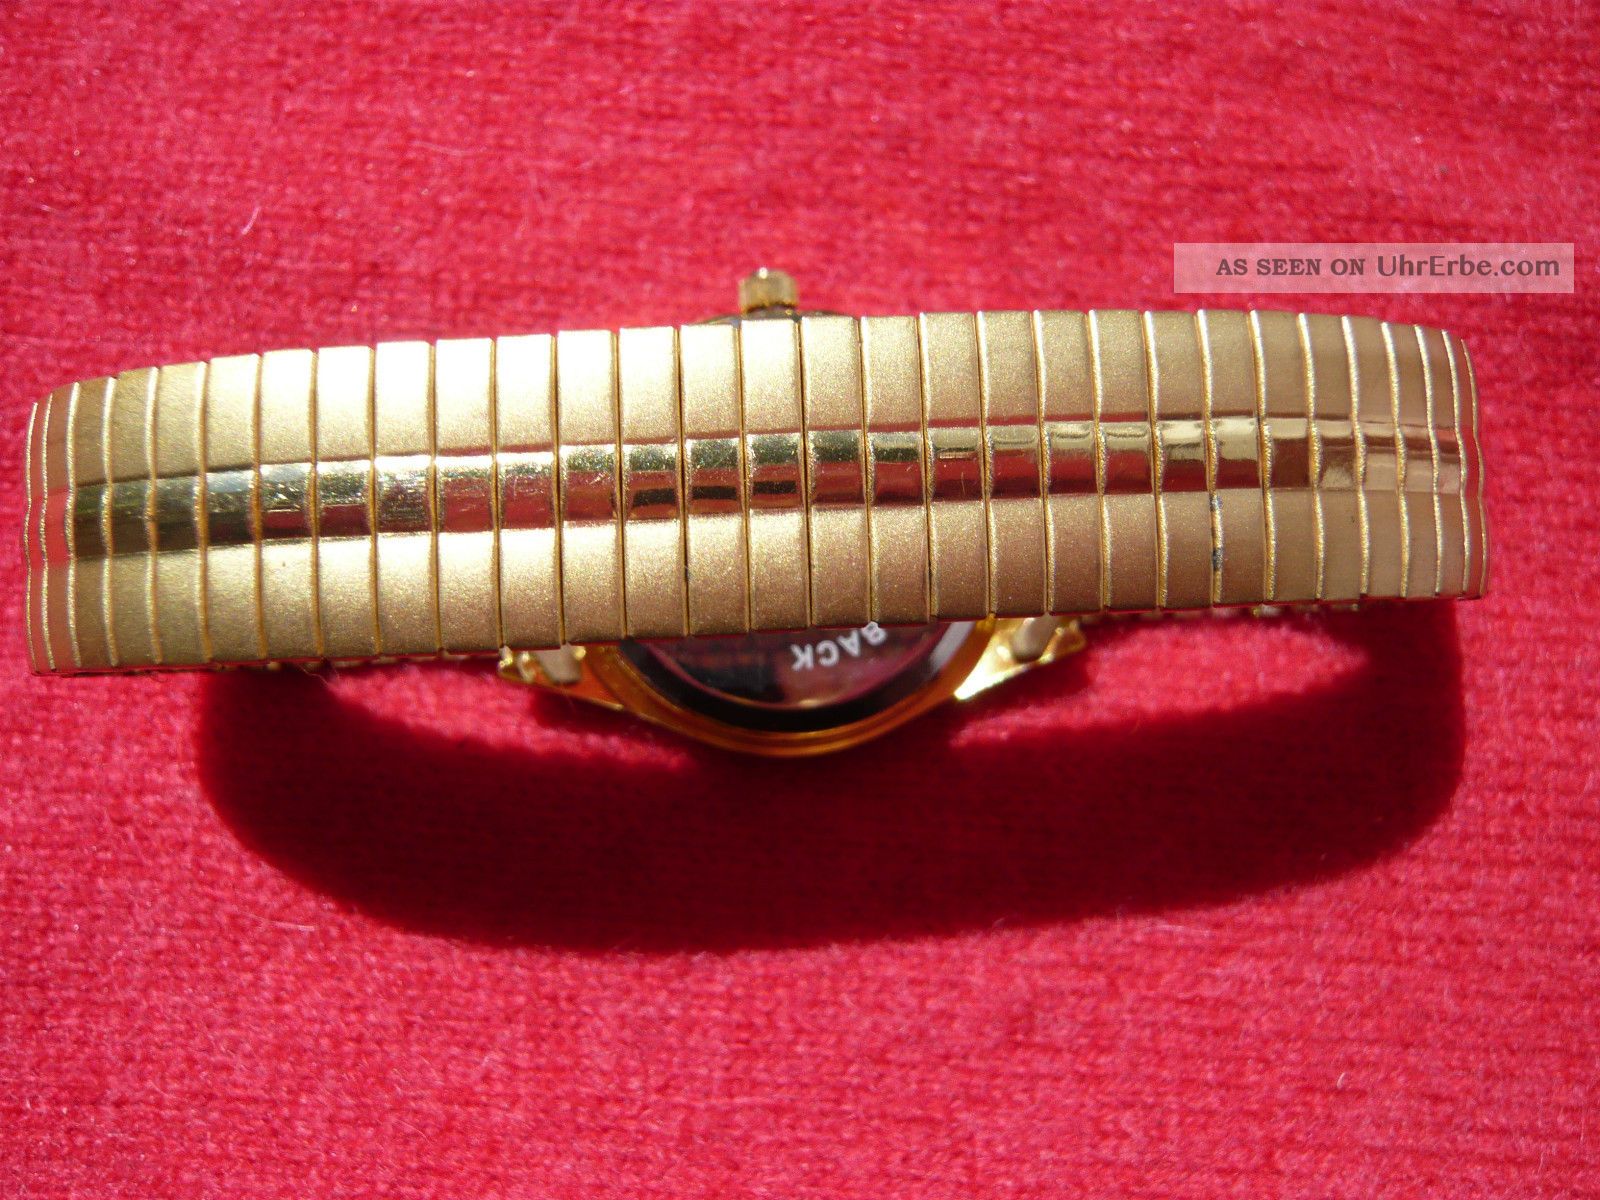 Ermex Quarz Armbanduhr Dehnband